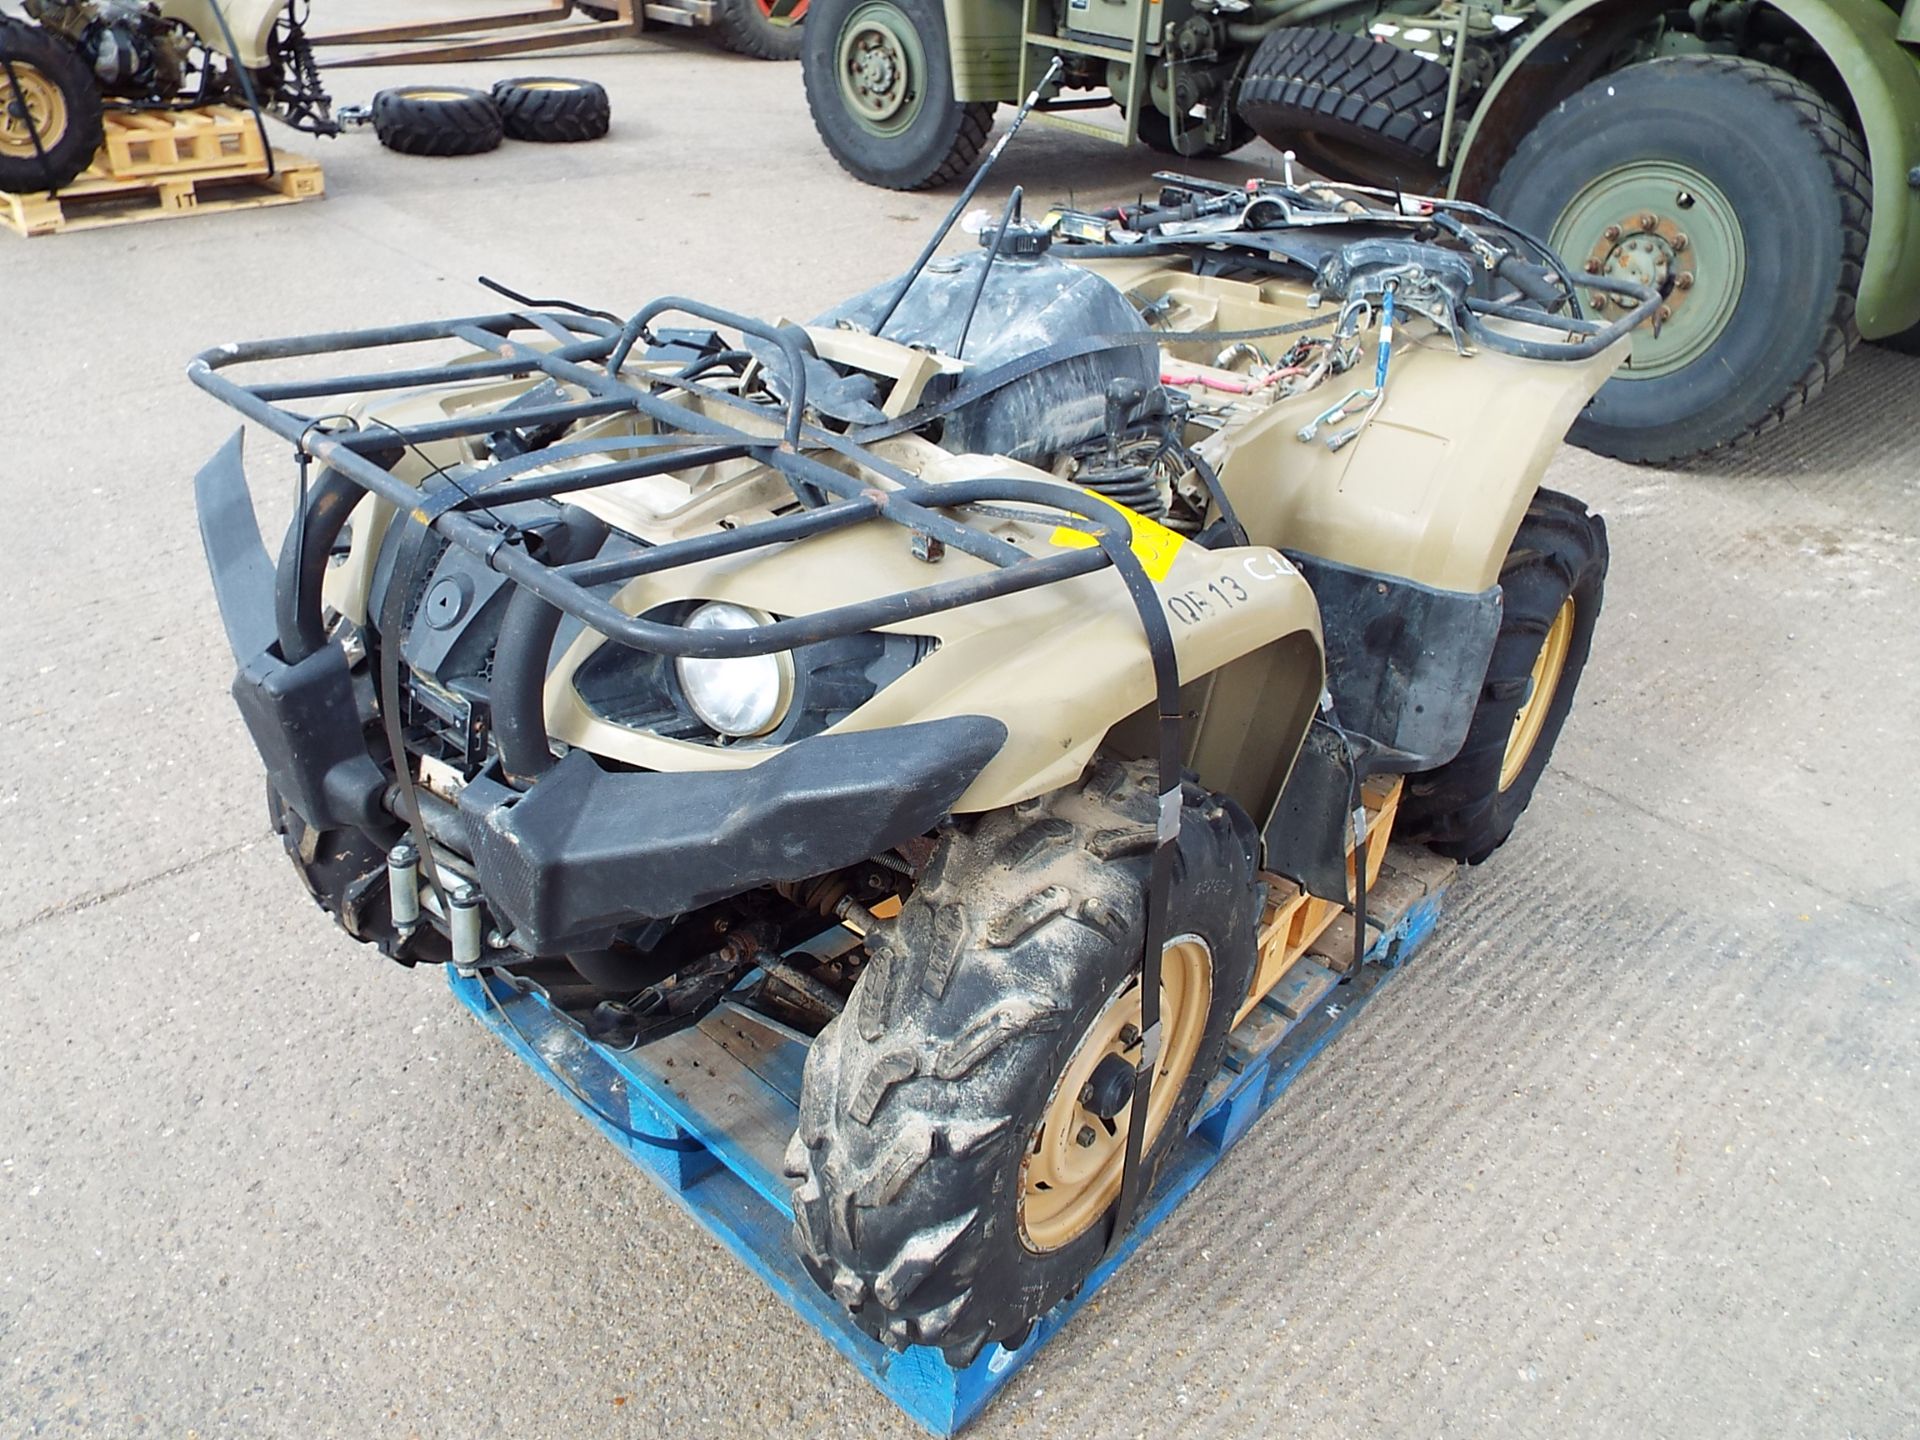 Military Specification Yamaha Grizzly 450 4 x 4 ATV Quad Bike with Winch - Bild 3 aus 20